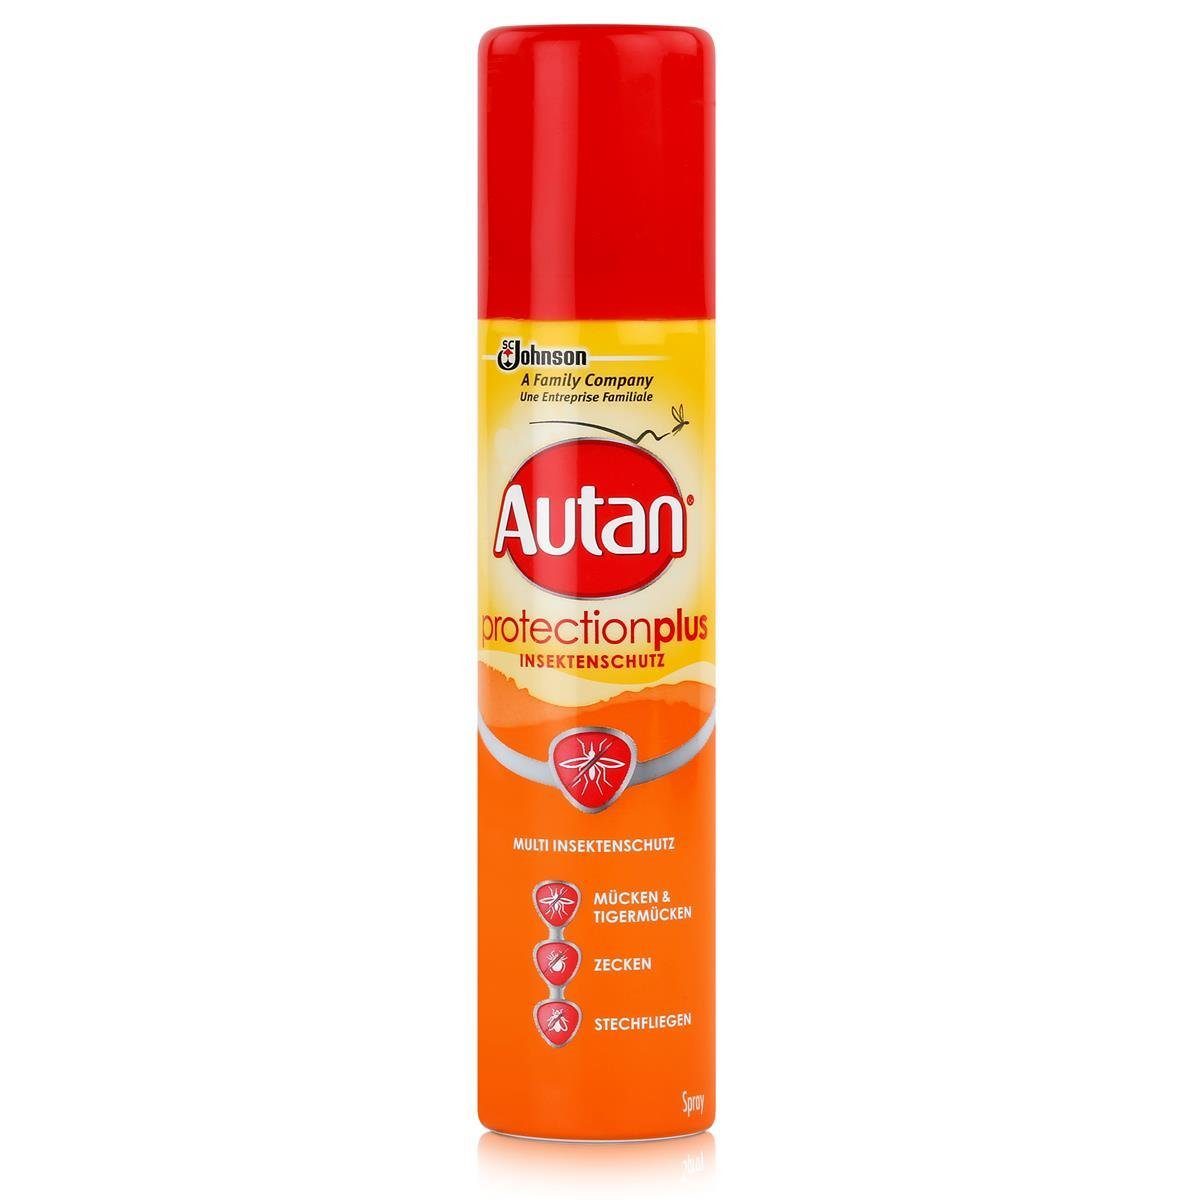 Autan Pack) Spray Protection Plus 100ml Insektenspray Autan (3er Multi Insektenschutz